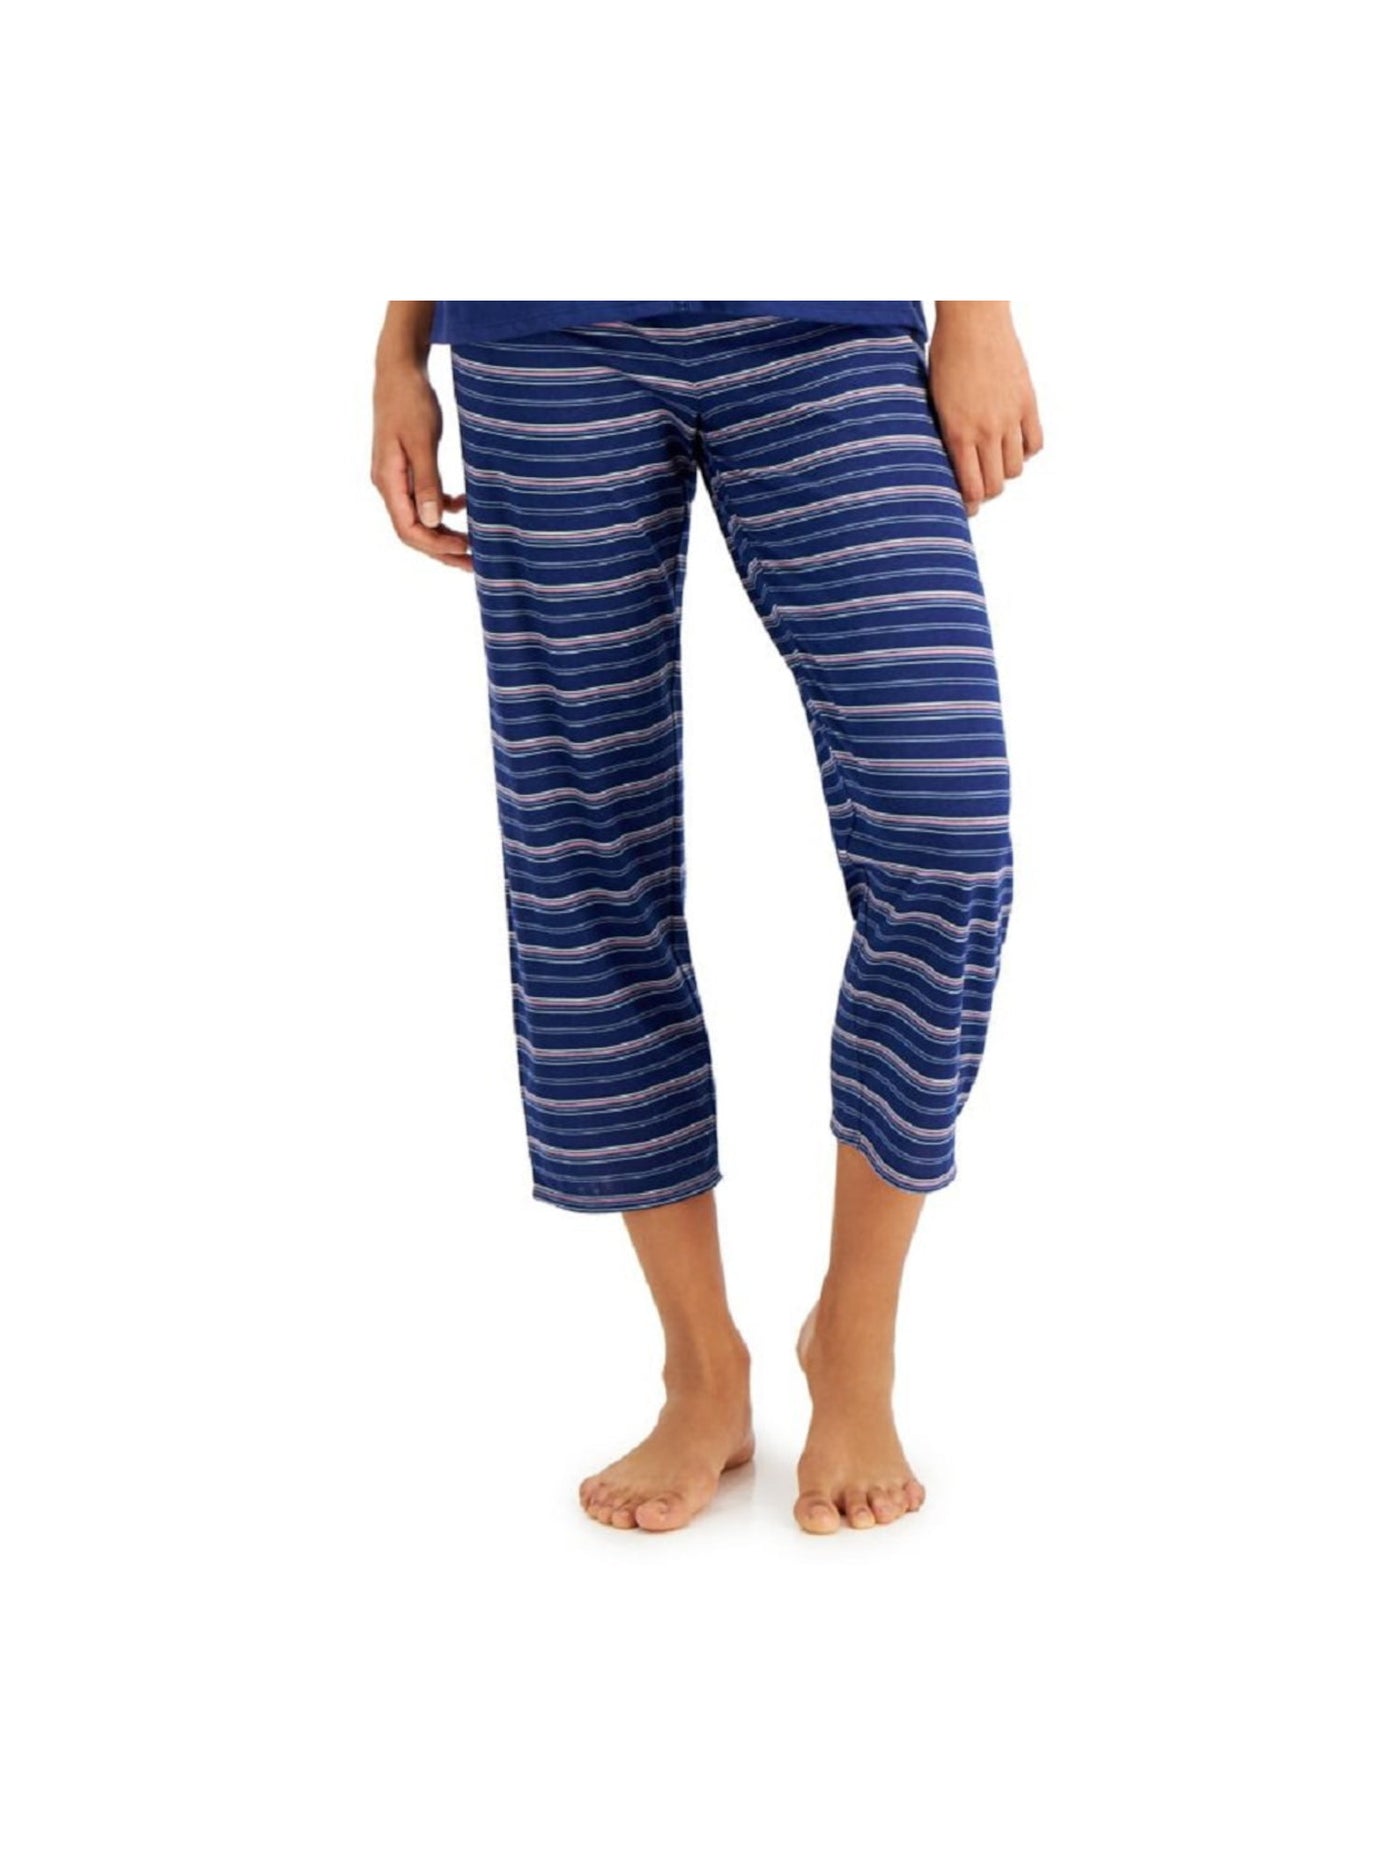 CHARTER CLUB INTIMATES Intimates Blue Cropped Striped Pajamas XL